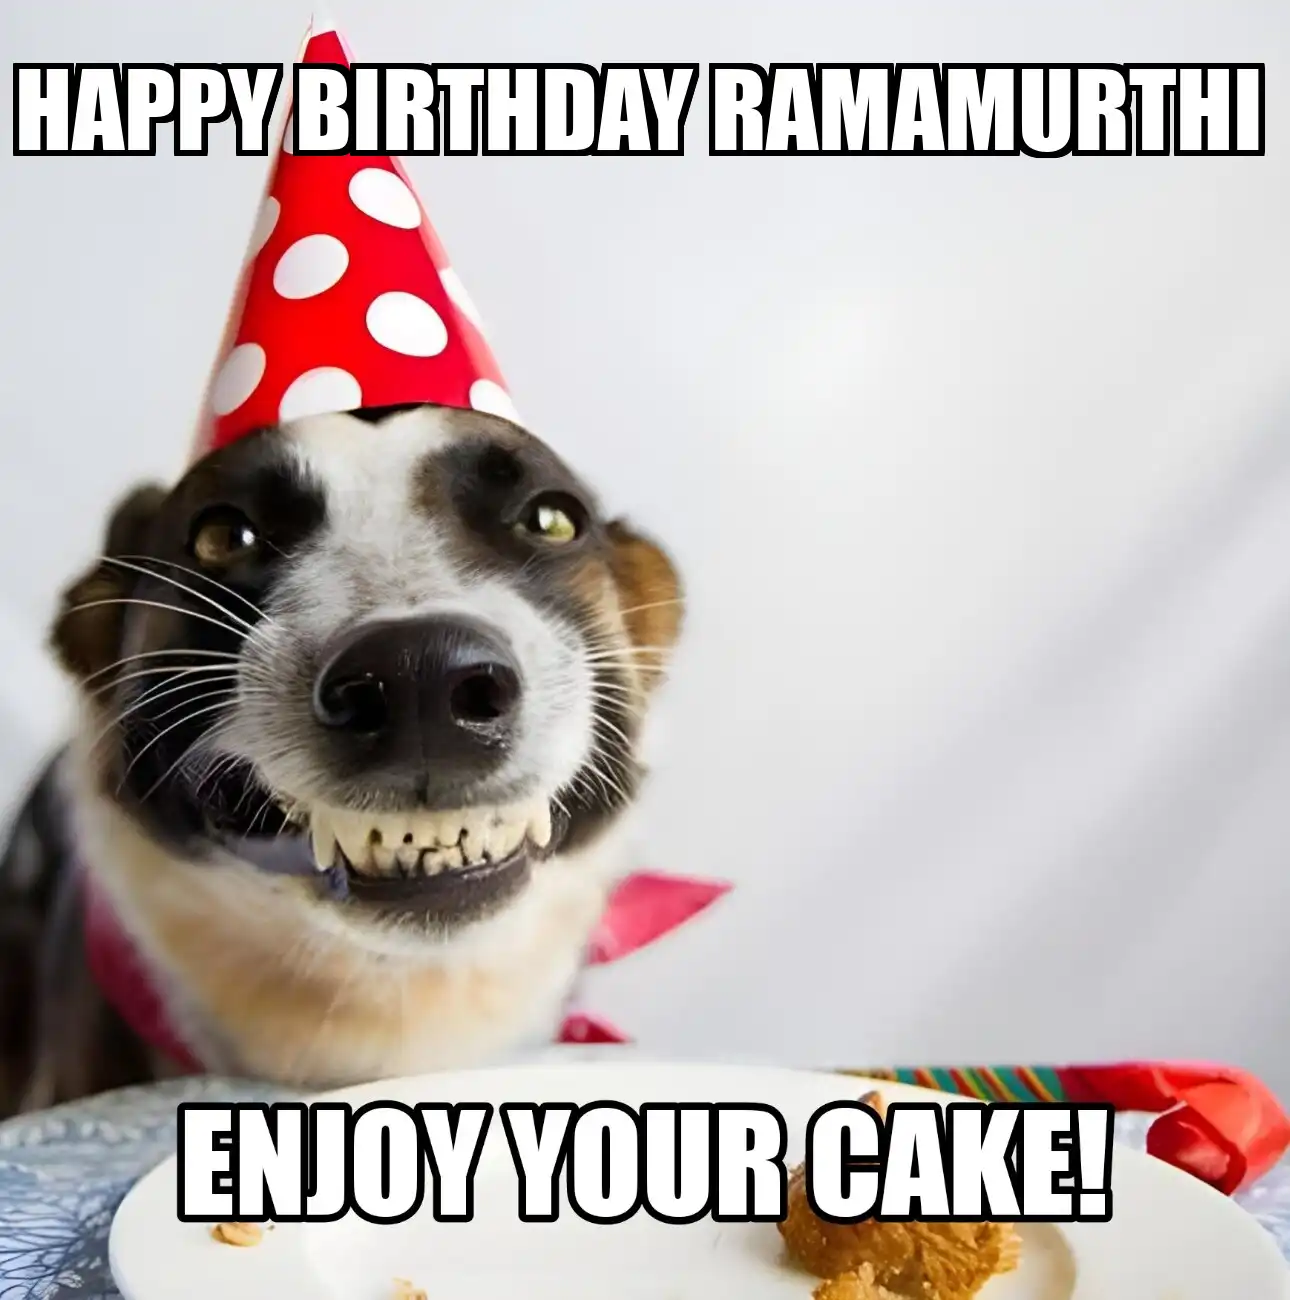 Happy Birthday Ramamurthi Enjoy Your Cake Dog Meme